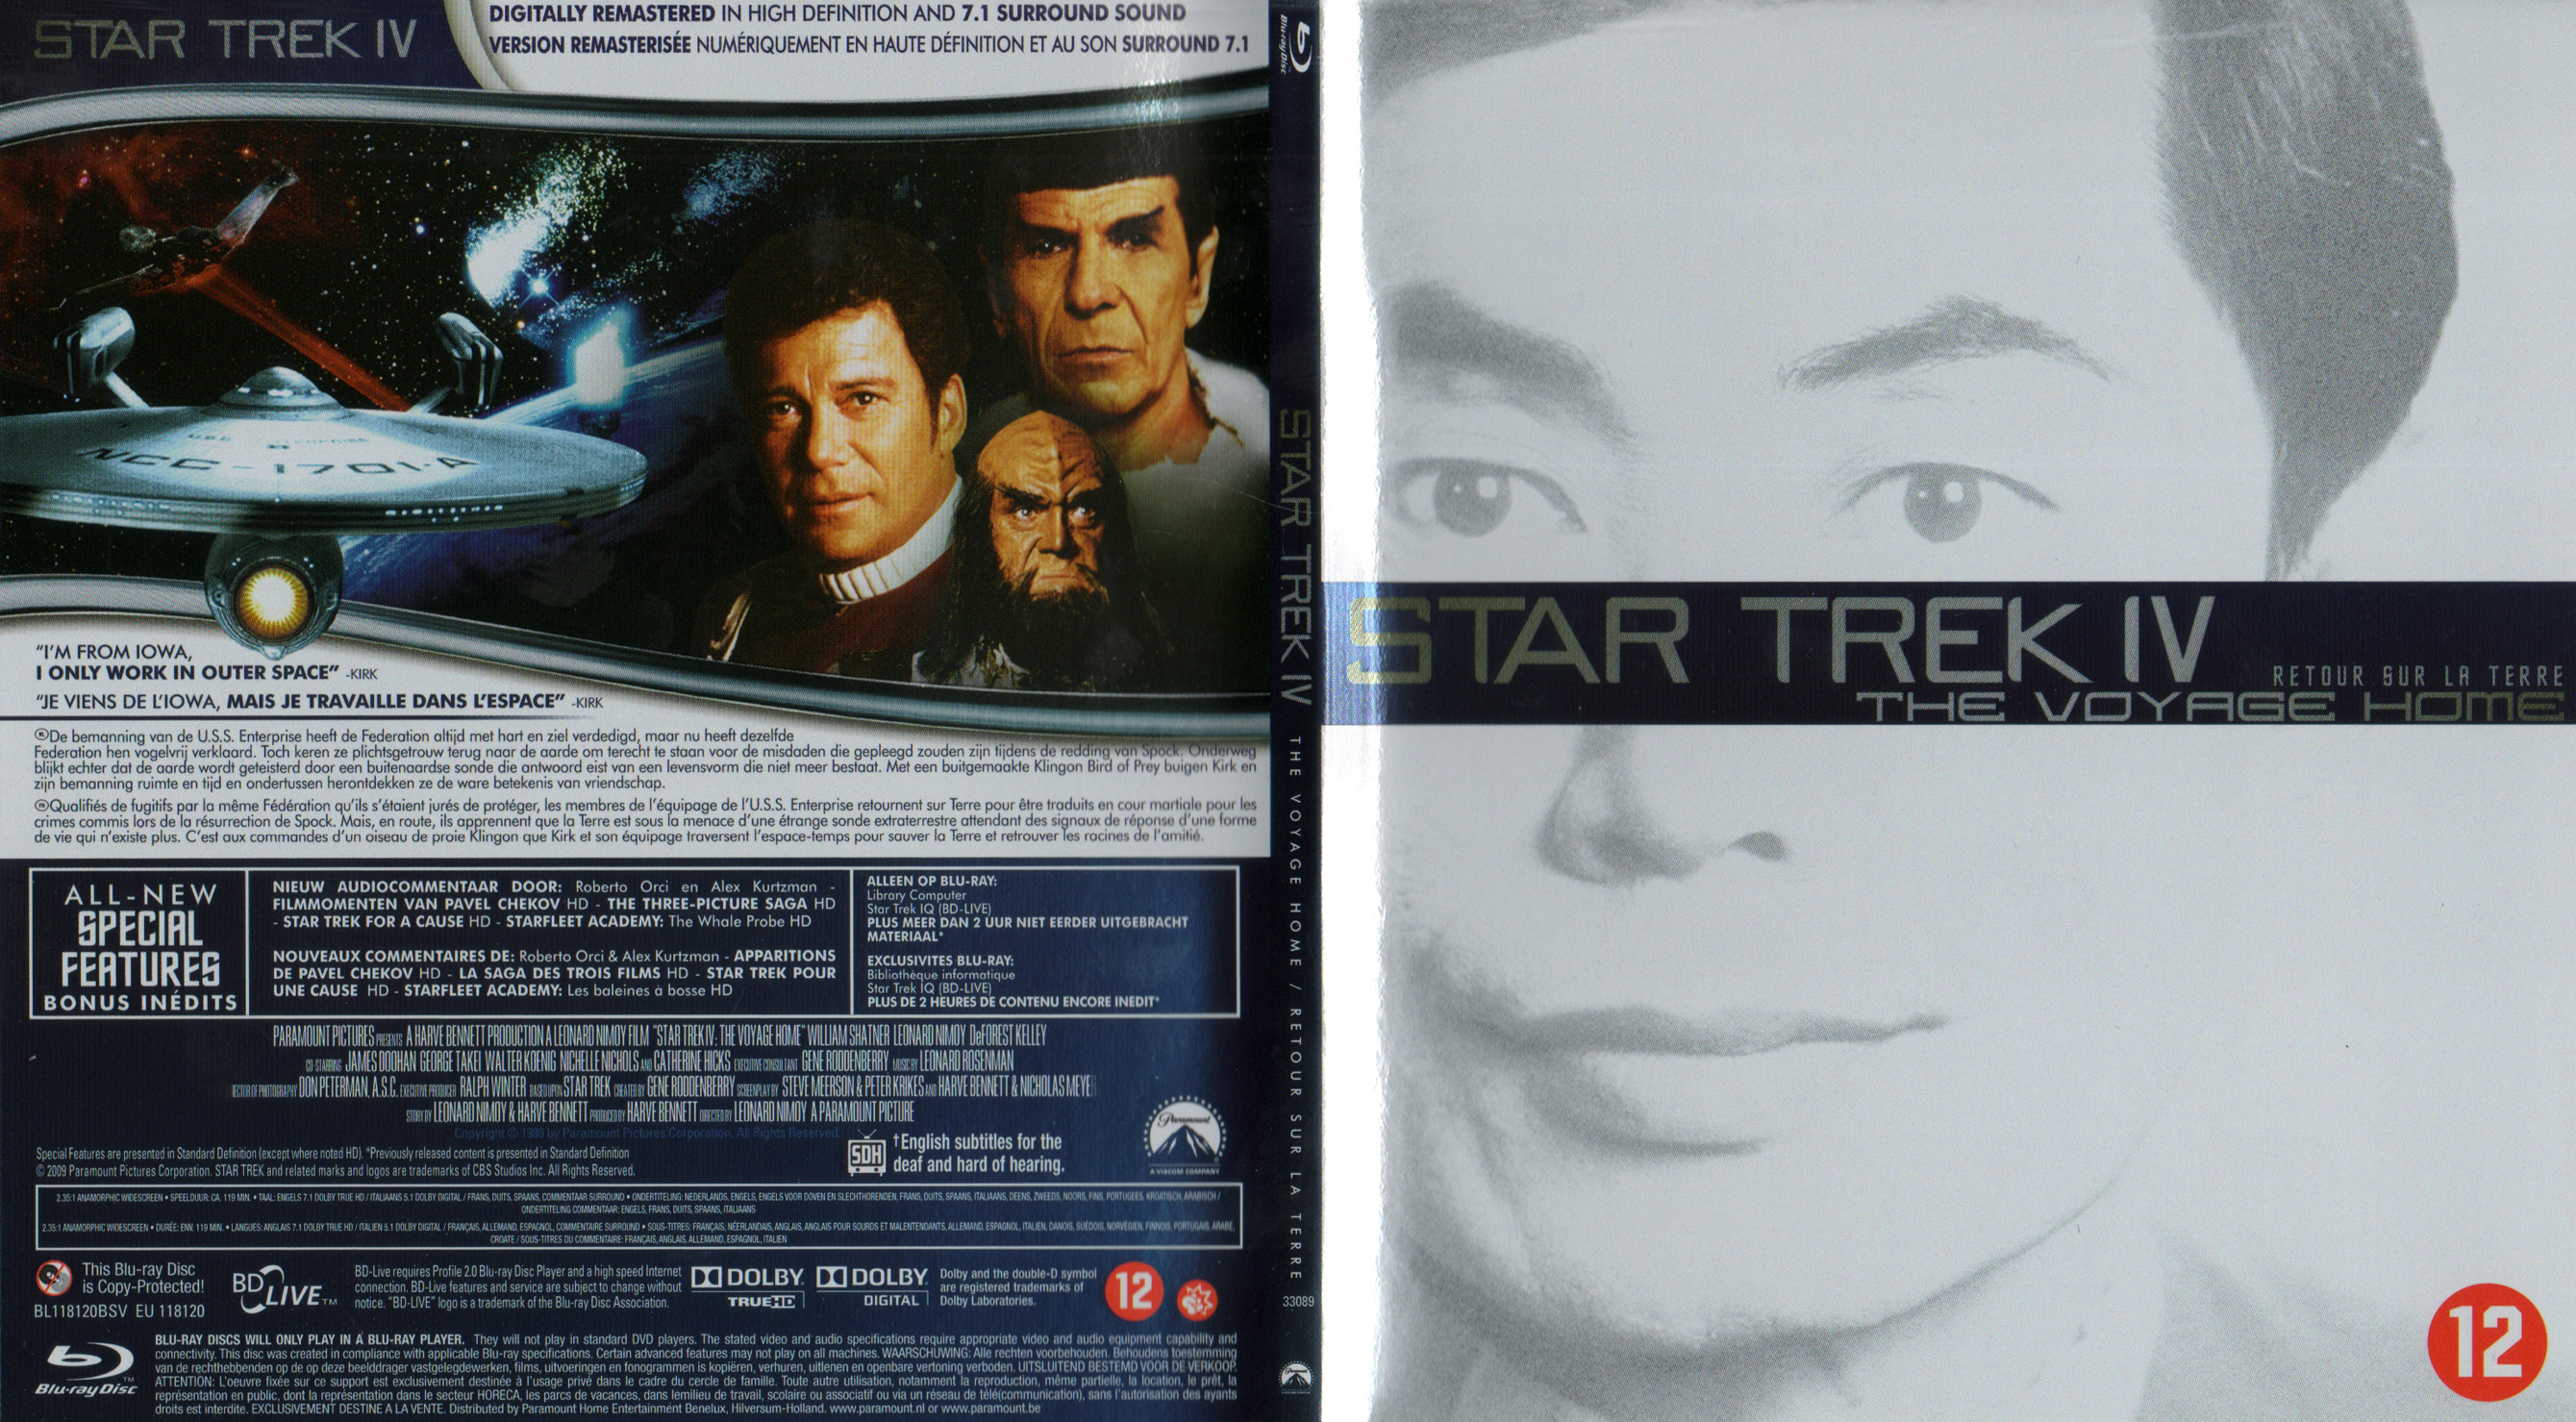 Jaquette DVD Star Trek 4 Retour sur terre (BLU-RAY) v2